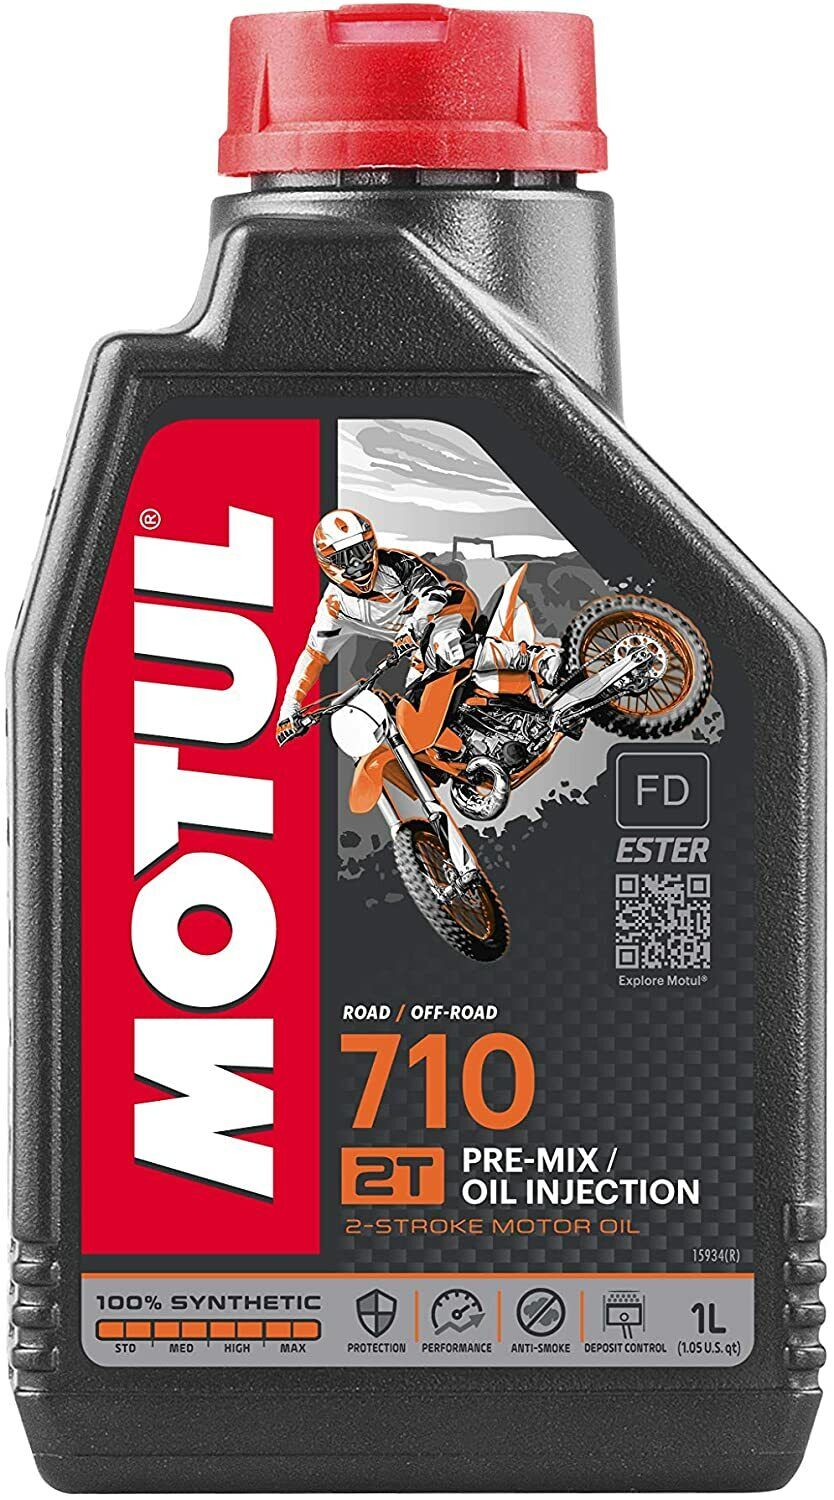 Motul 710 2T 100% synthetic 2-Stroke Ester Core 1L Engine Motor Oil 1 x 1L